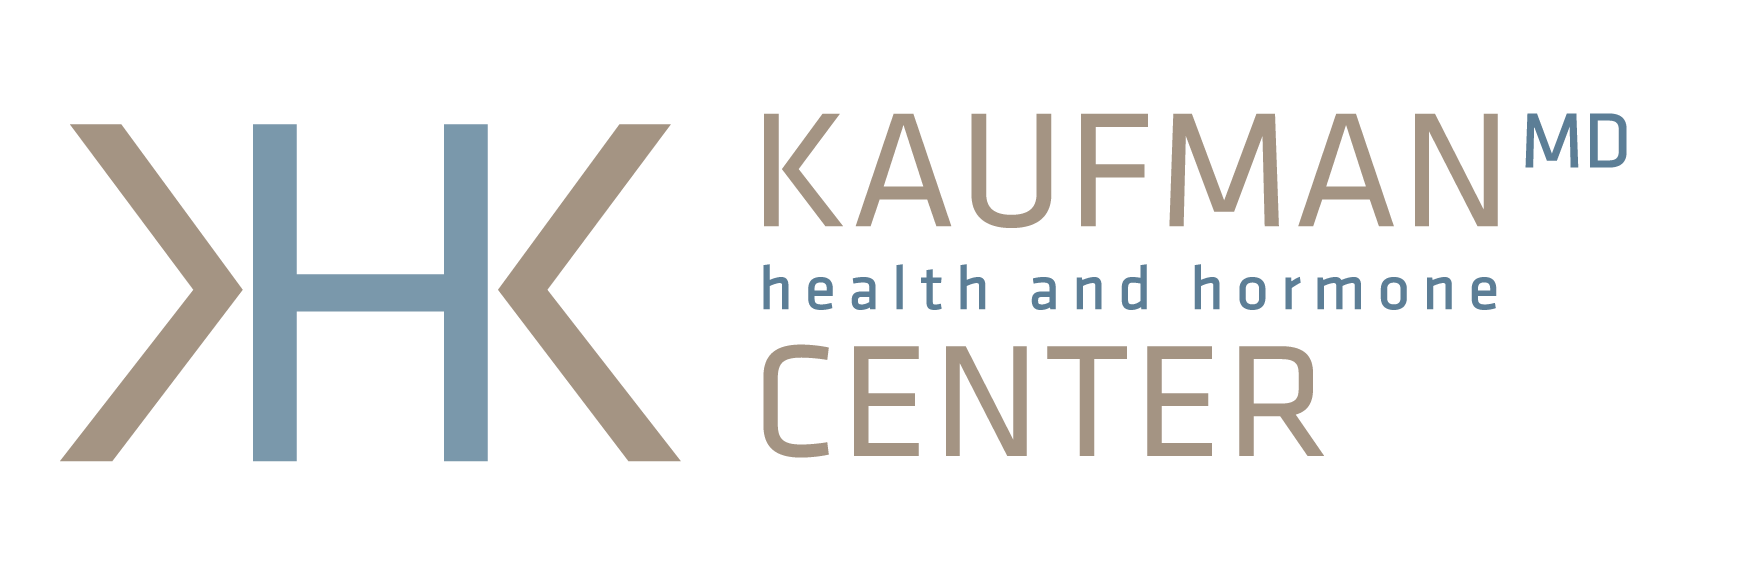 Kaufman Health and Hormone Center with Dr. Karen Kaufman